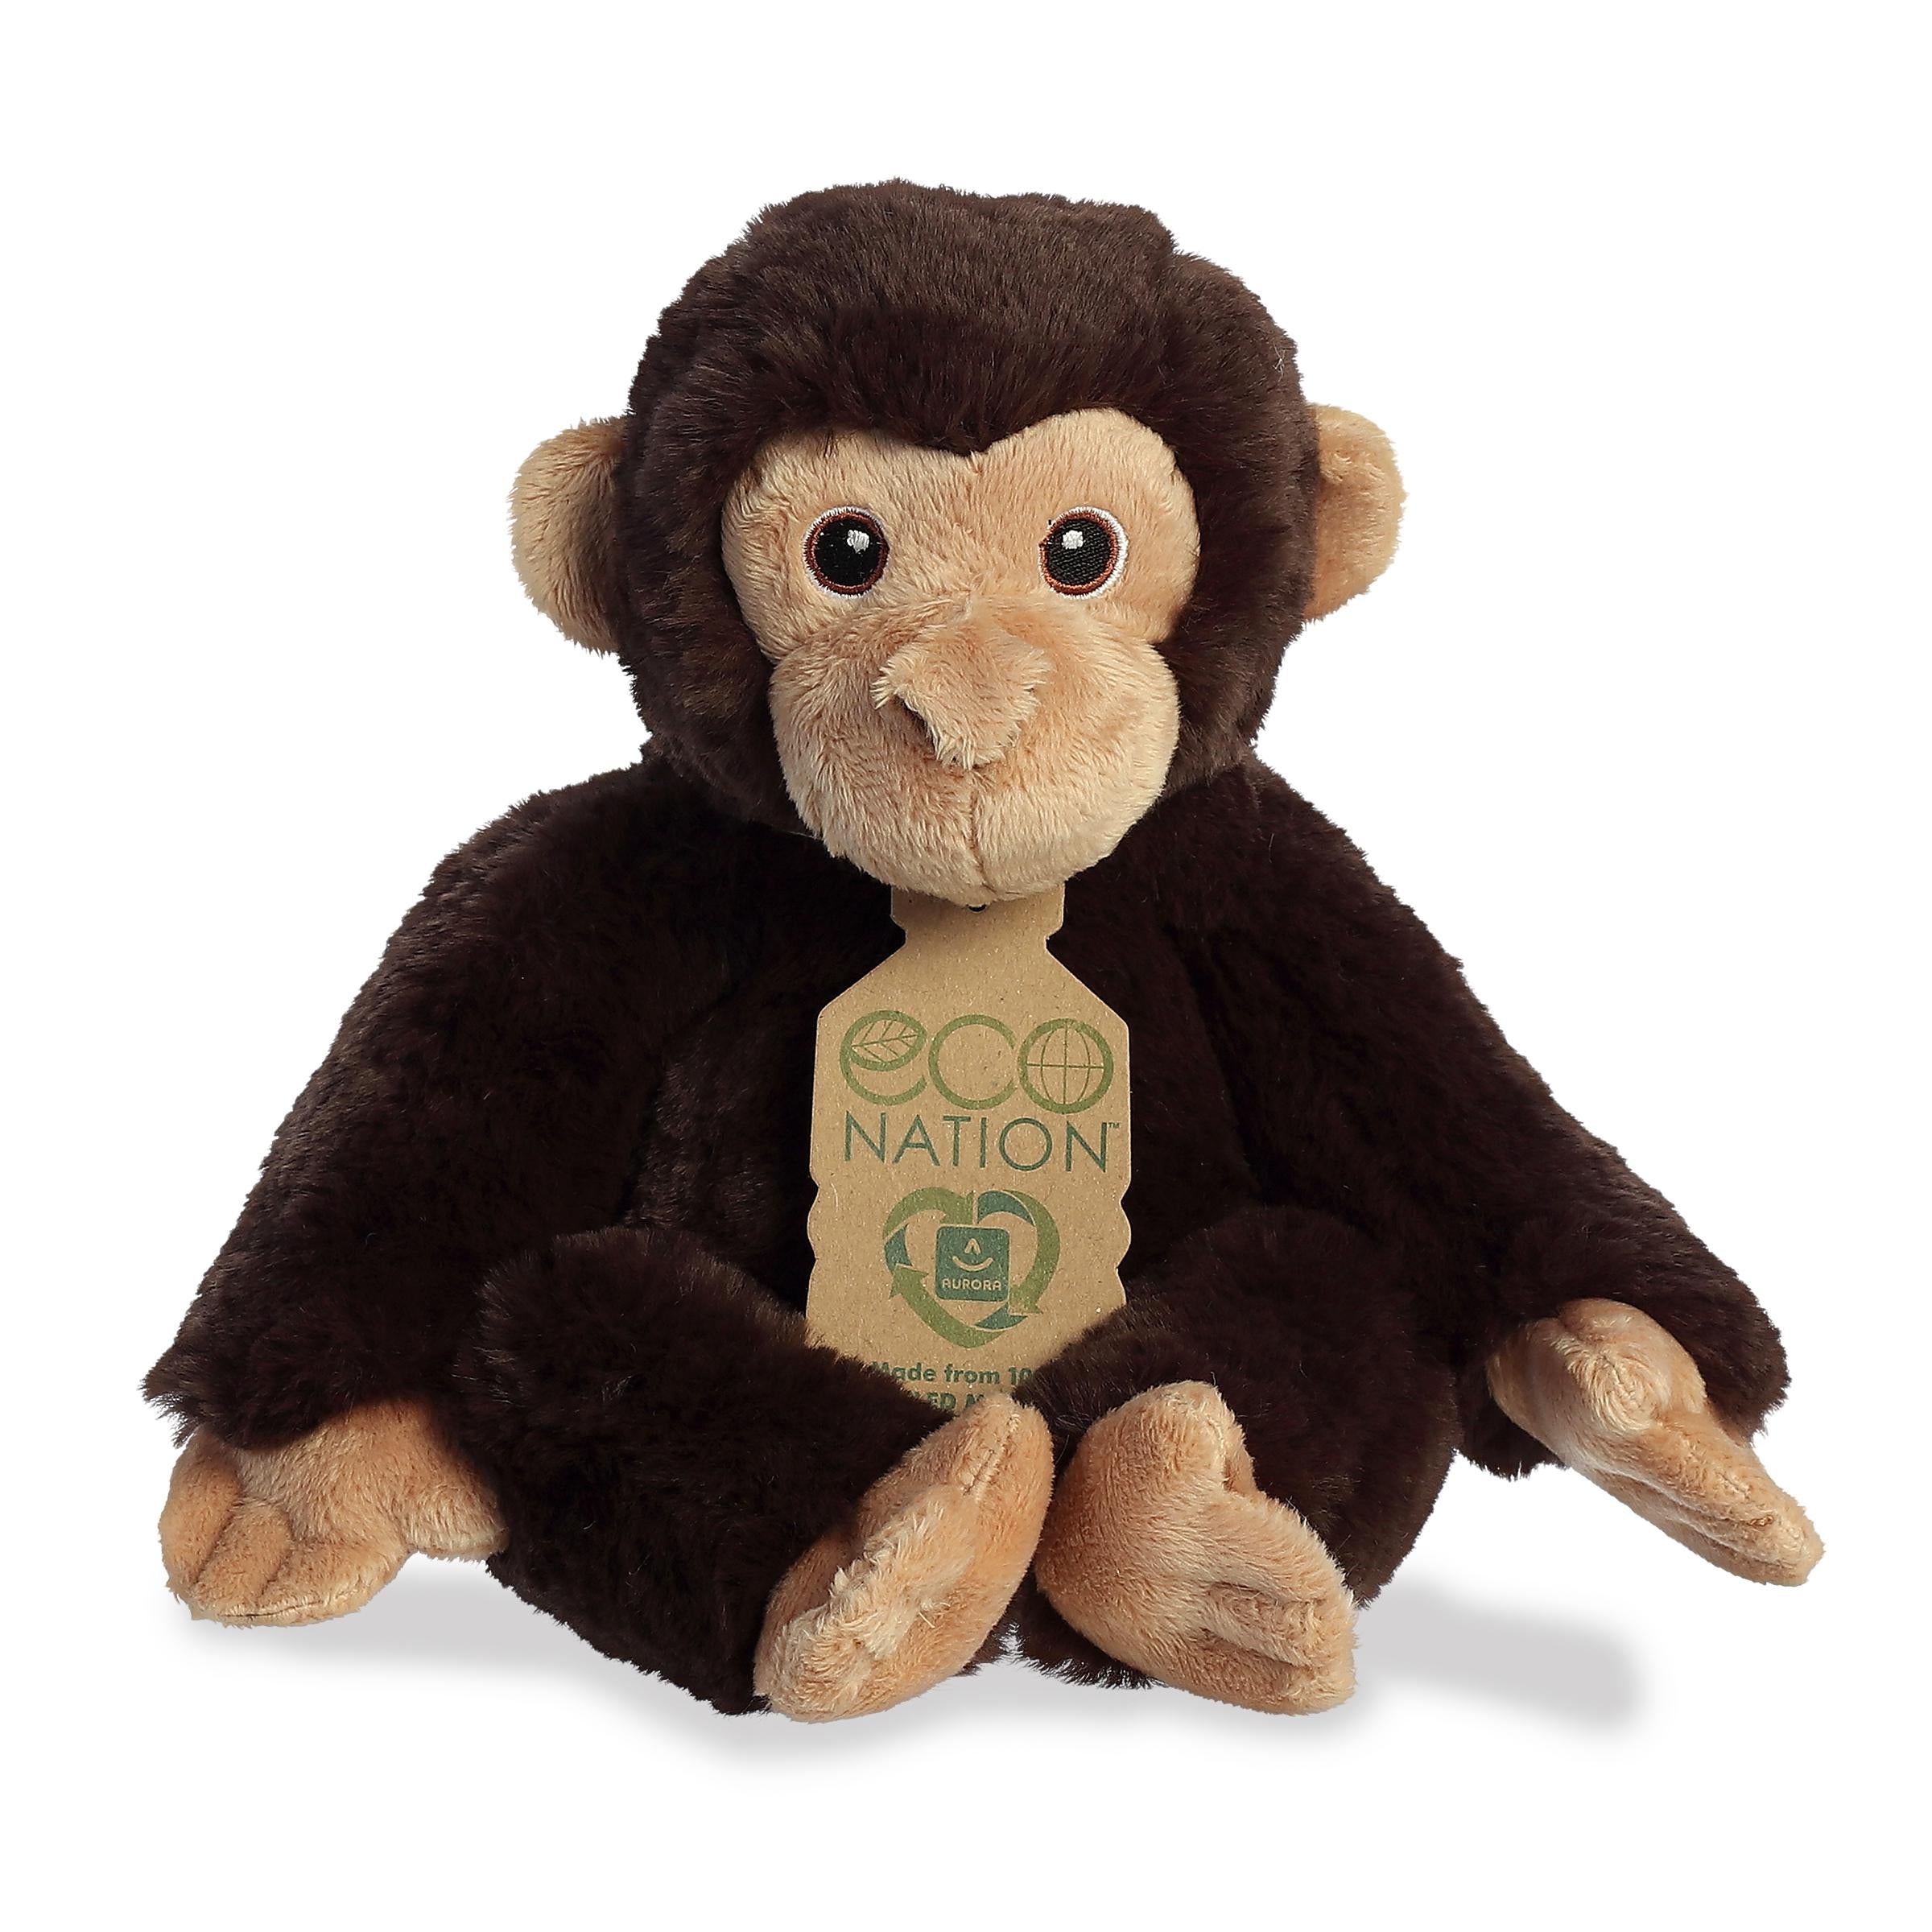 Chimpanzee Ã¢â‚¬â€œ Playful Eco-Nation Stuffed Animals Ã¢â‚¬â€œ Aurora